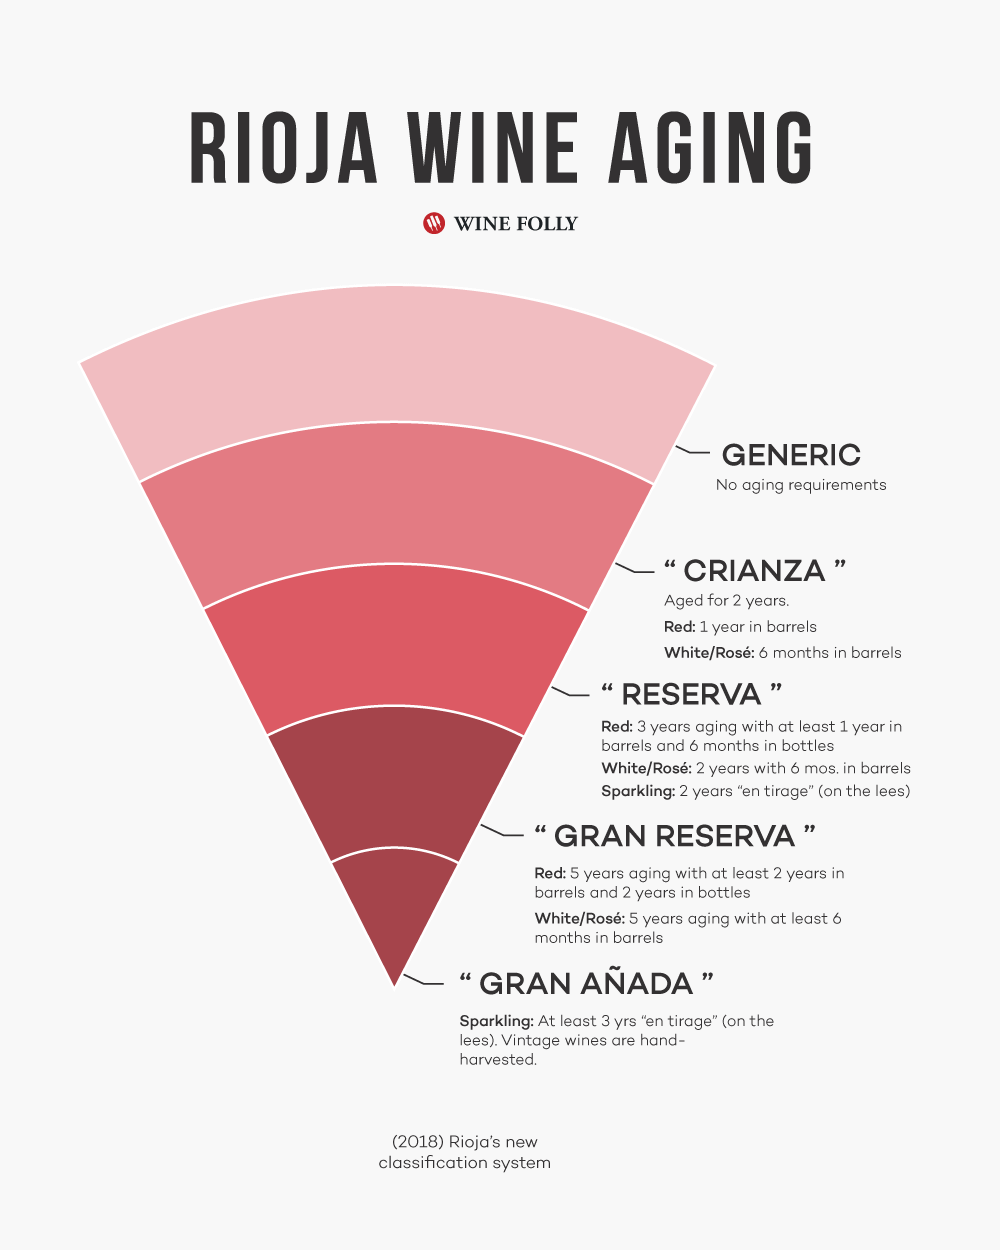 Rioja Wine New Aging Classification system inkludert Crianza, Reserva, Gran Reserva og Gran Anada